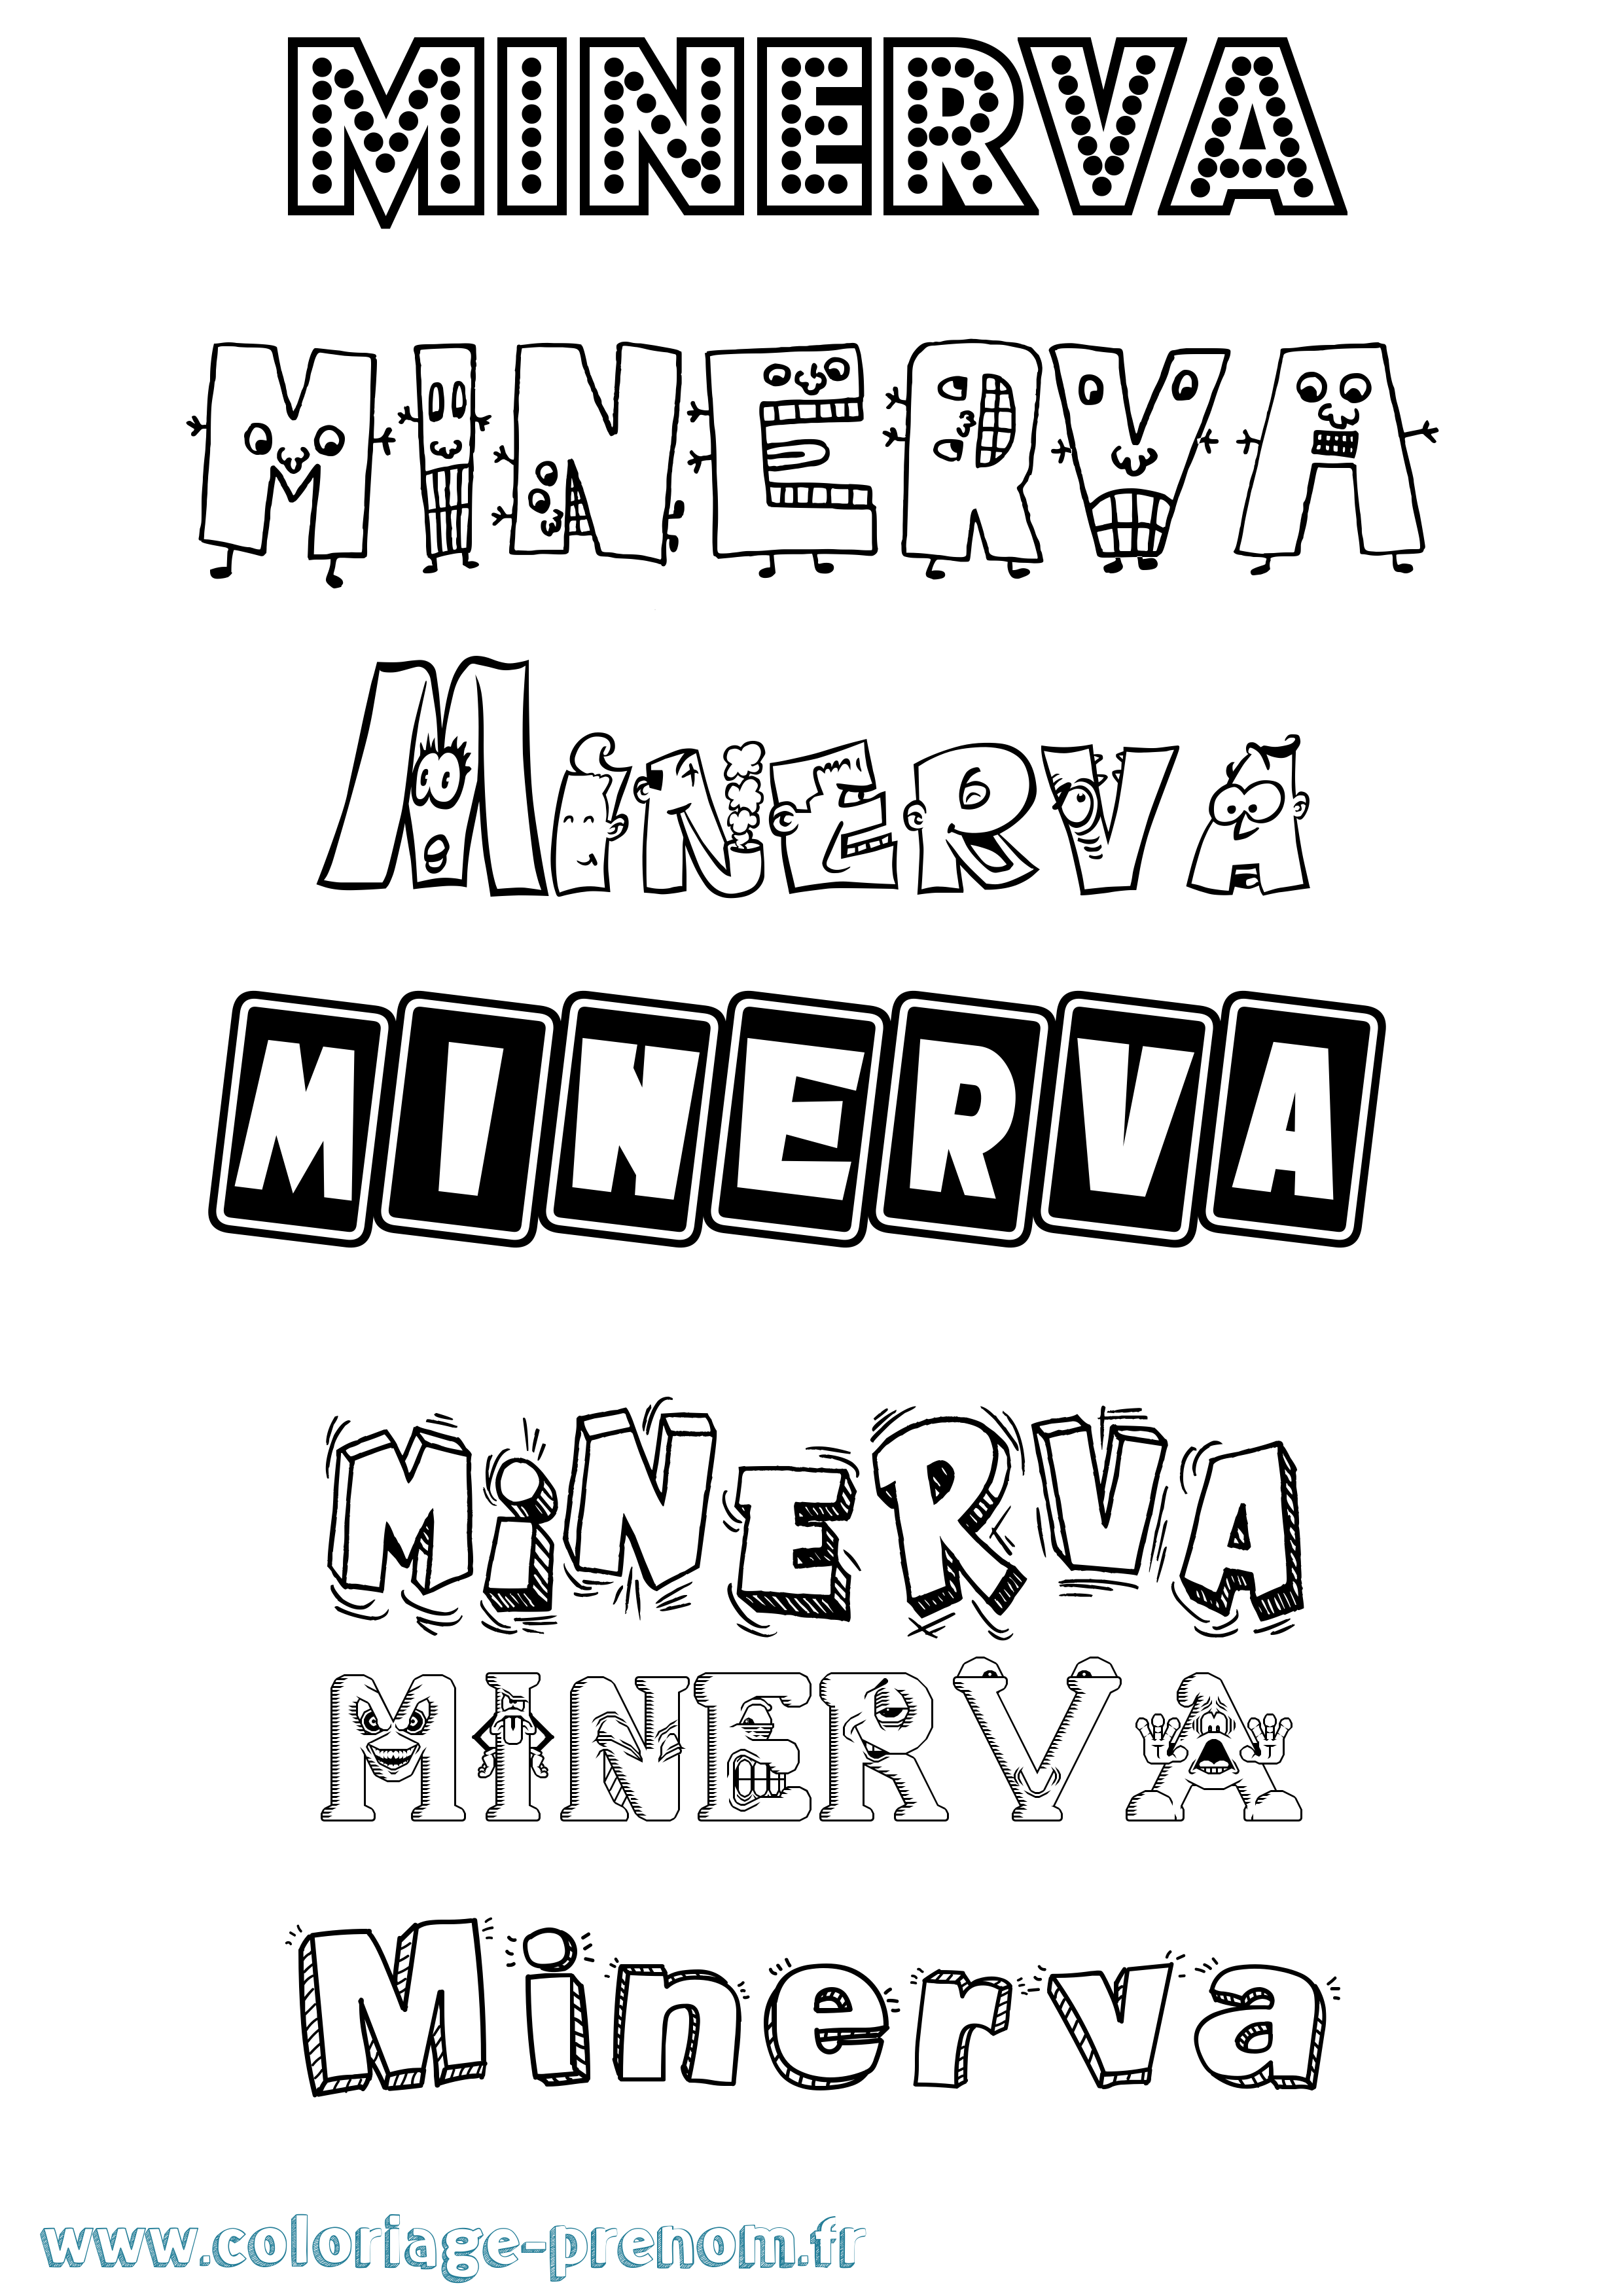 Coloriage prénom Minerva Fun